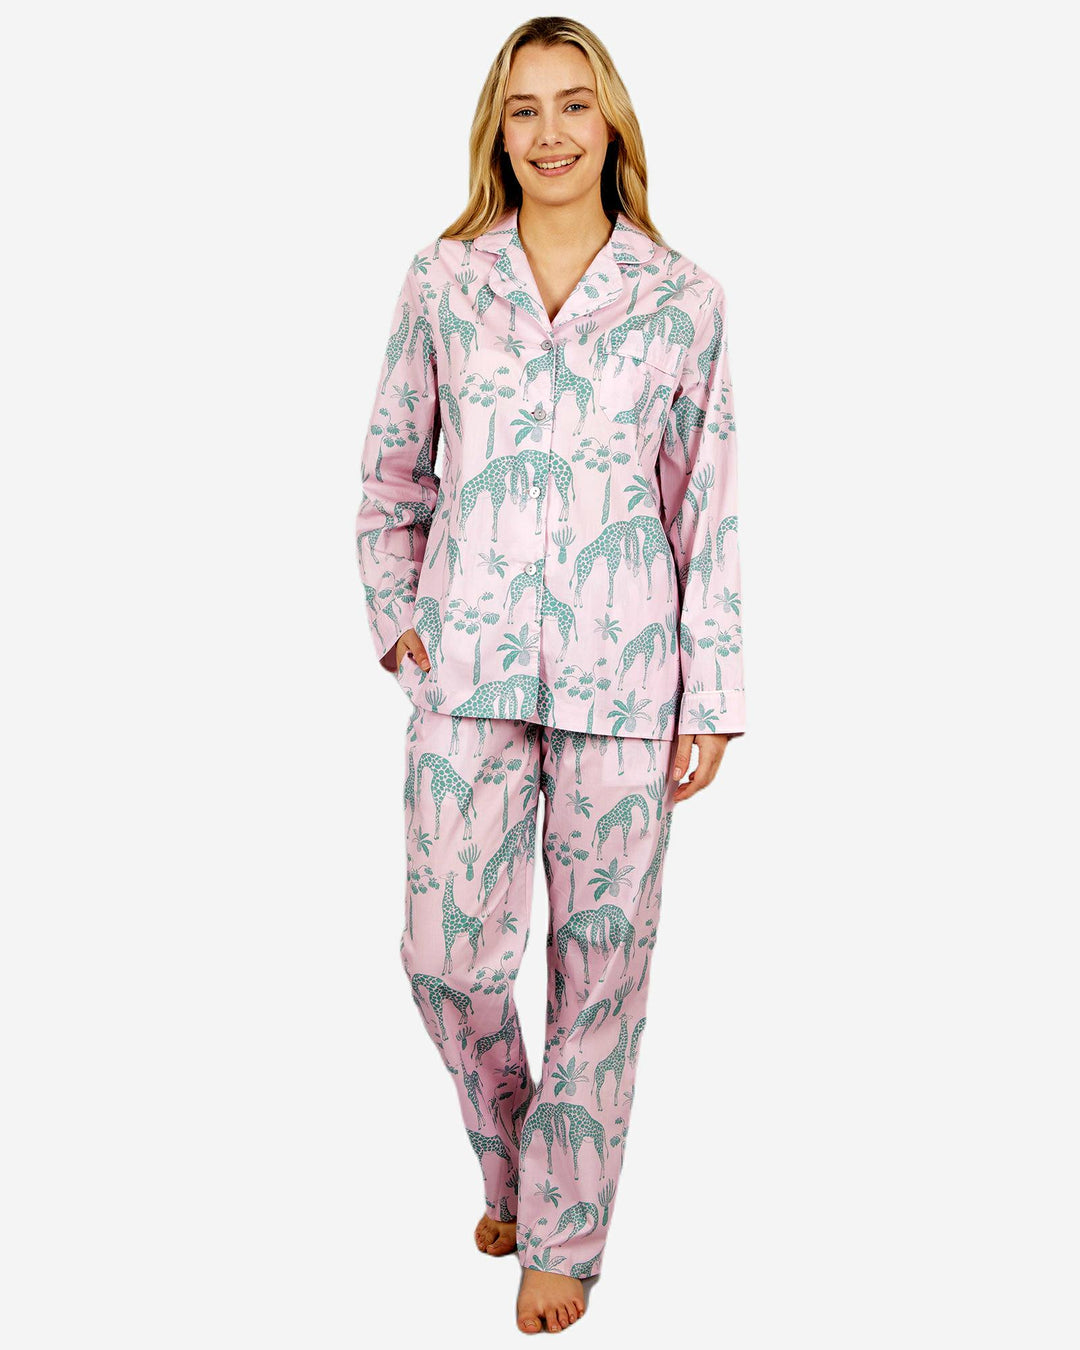 Womens long pyjamas - giraffes pink